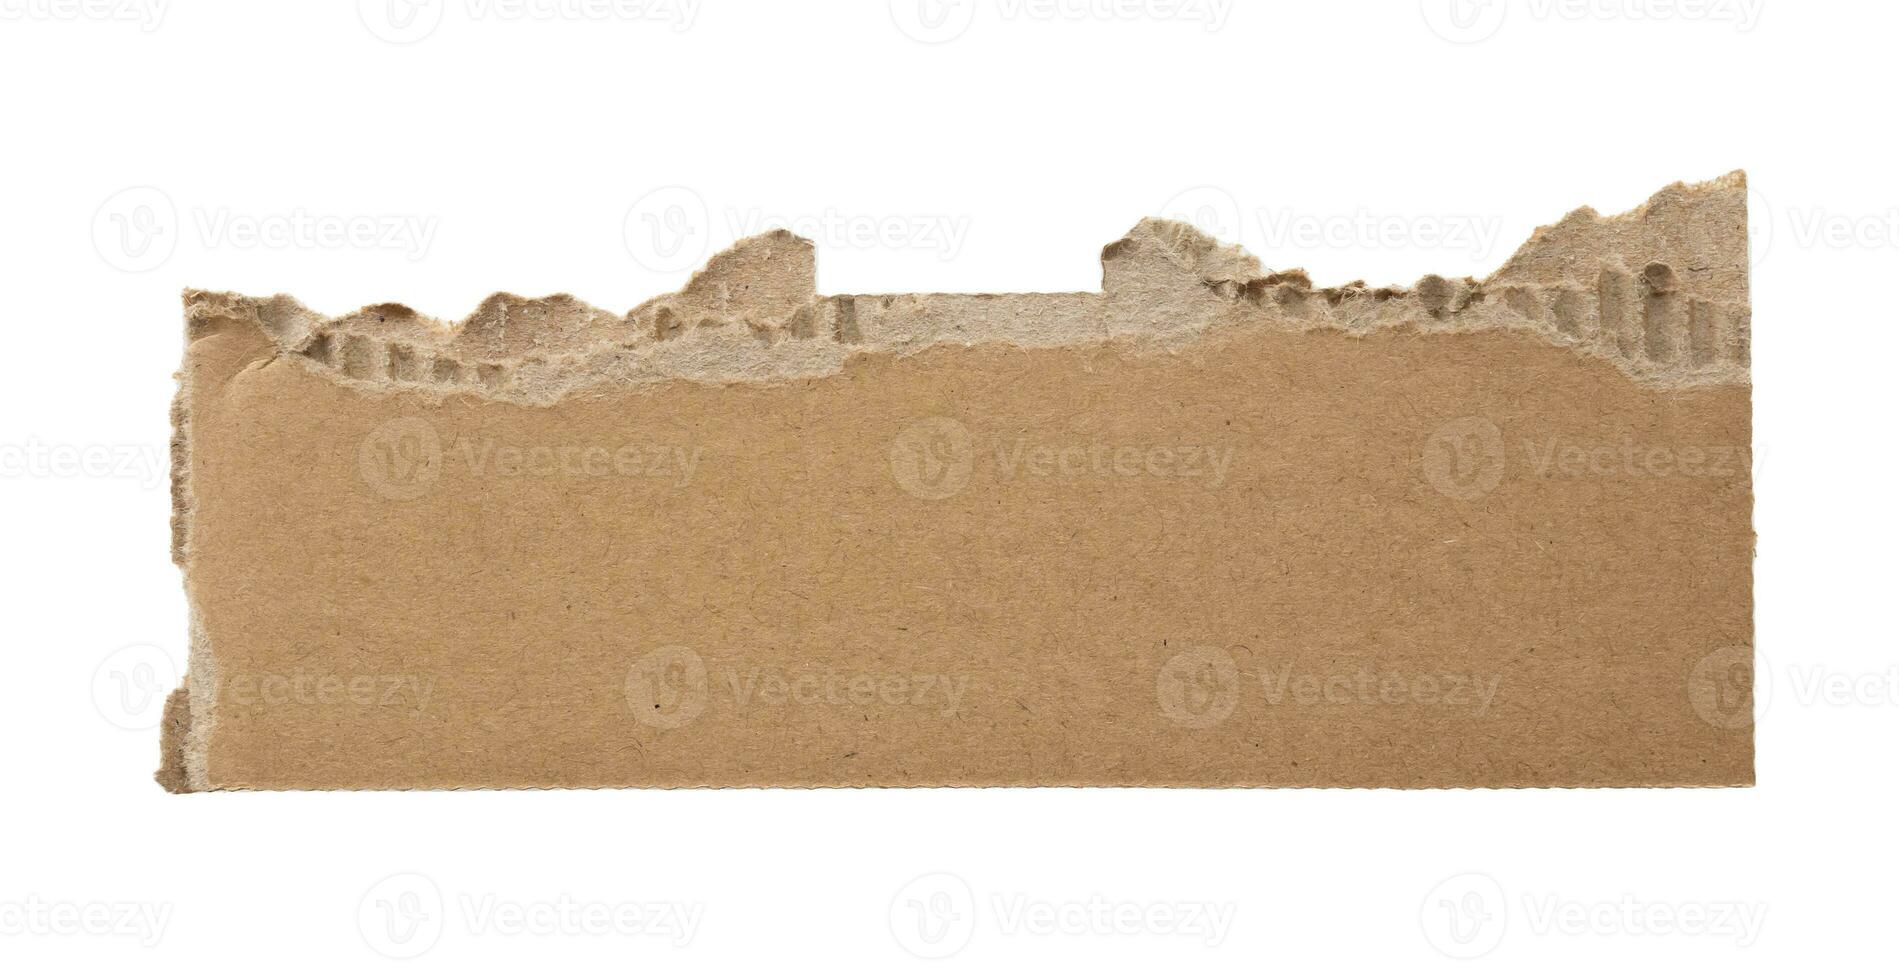 brun kartong papper bit isolerat på vit bakgrund foto